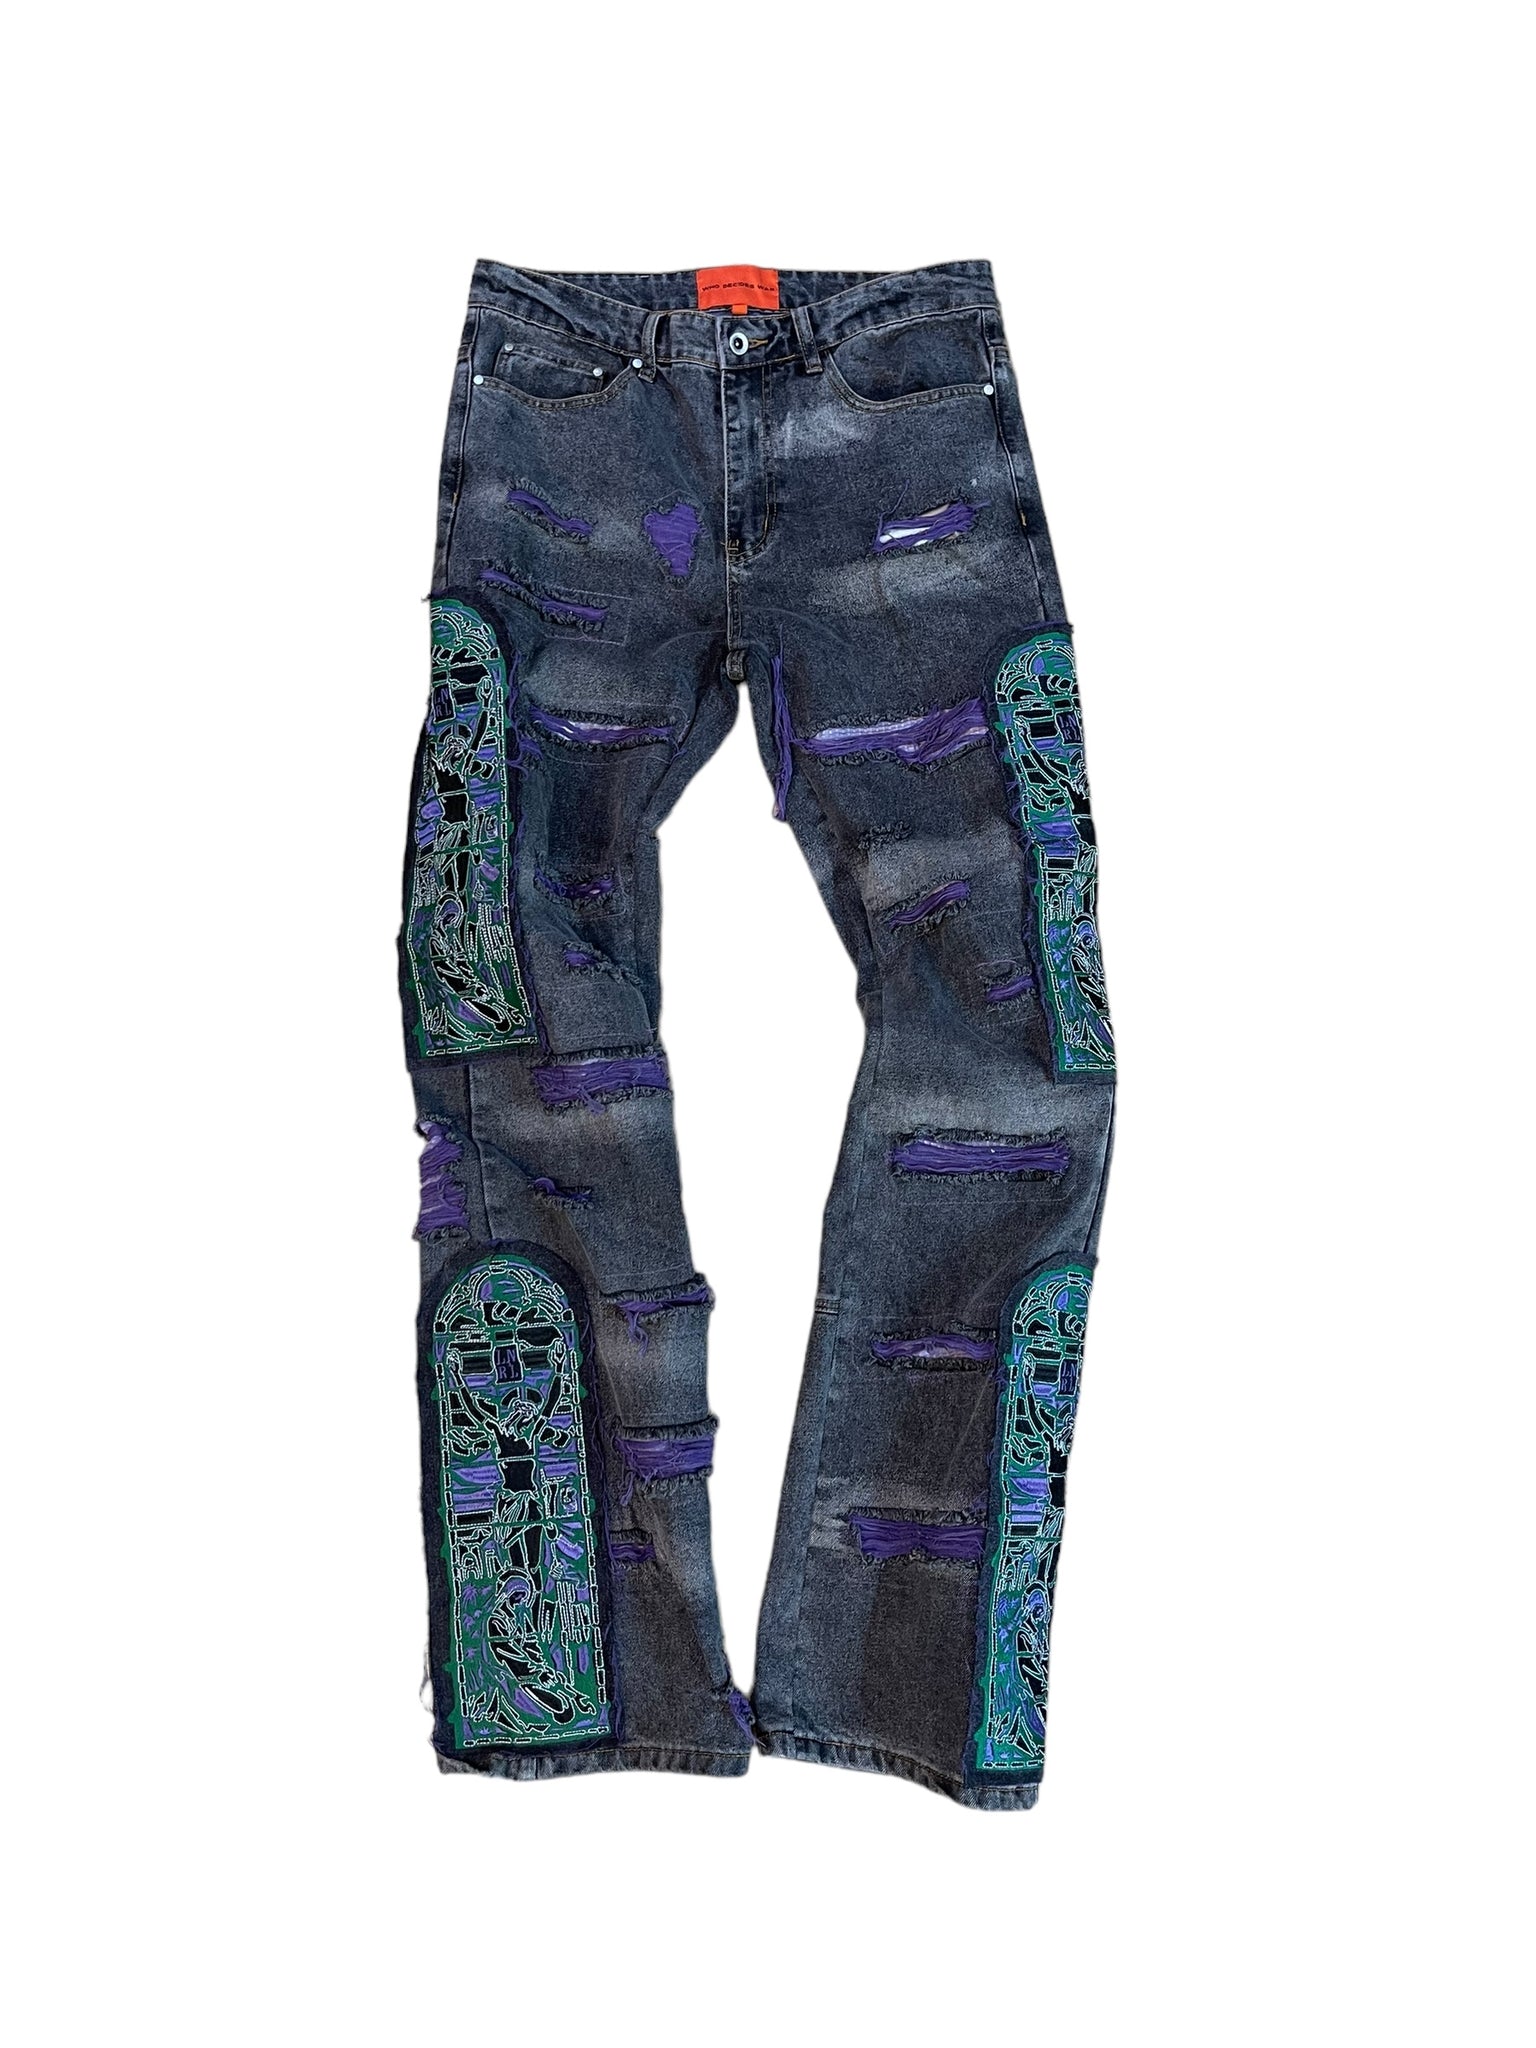 Who Decides War Window Jeans "Purple/Green"